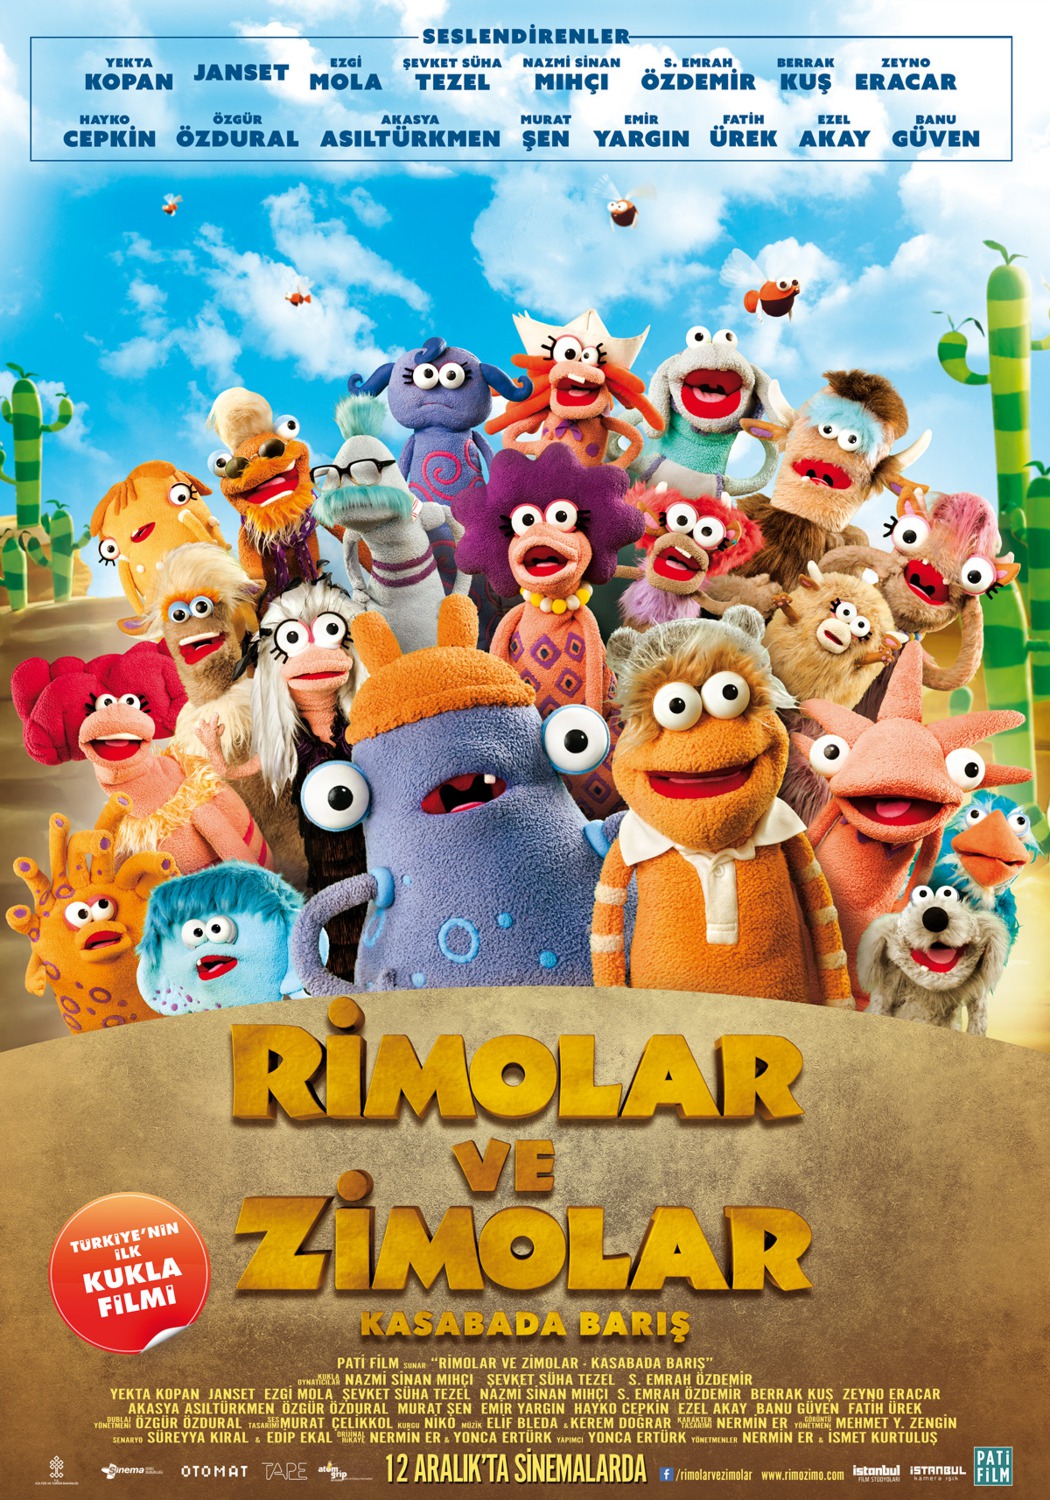 Extra Large Movie Poster Image for Rimolar ve Zimolar: Kasabada Baris 